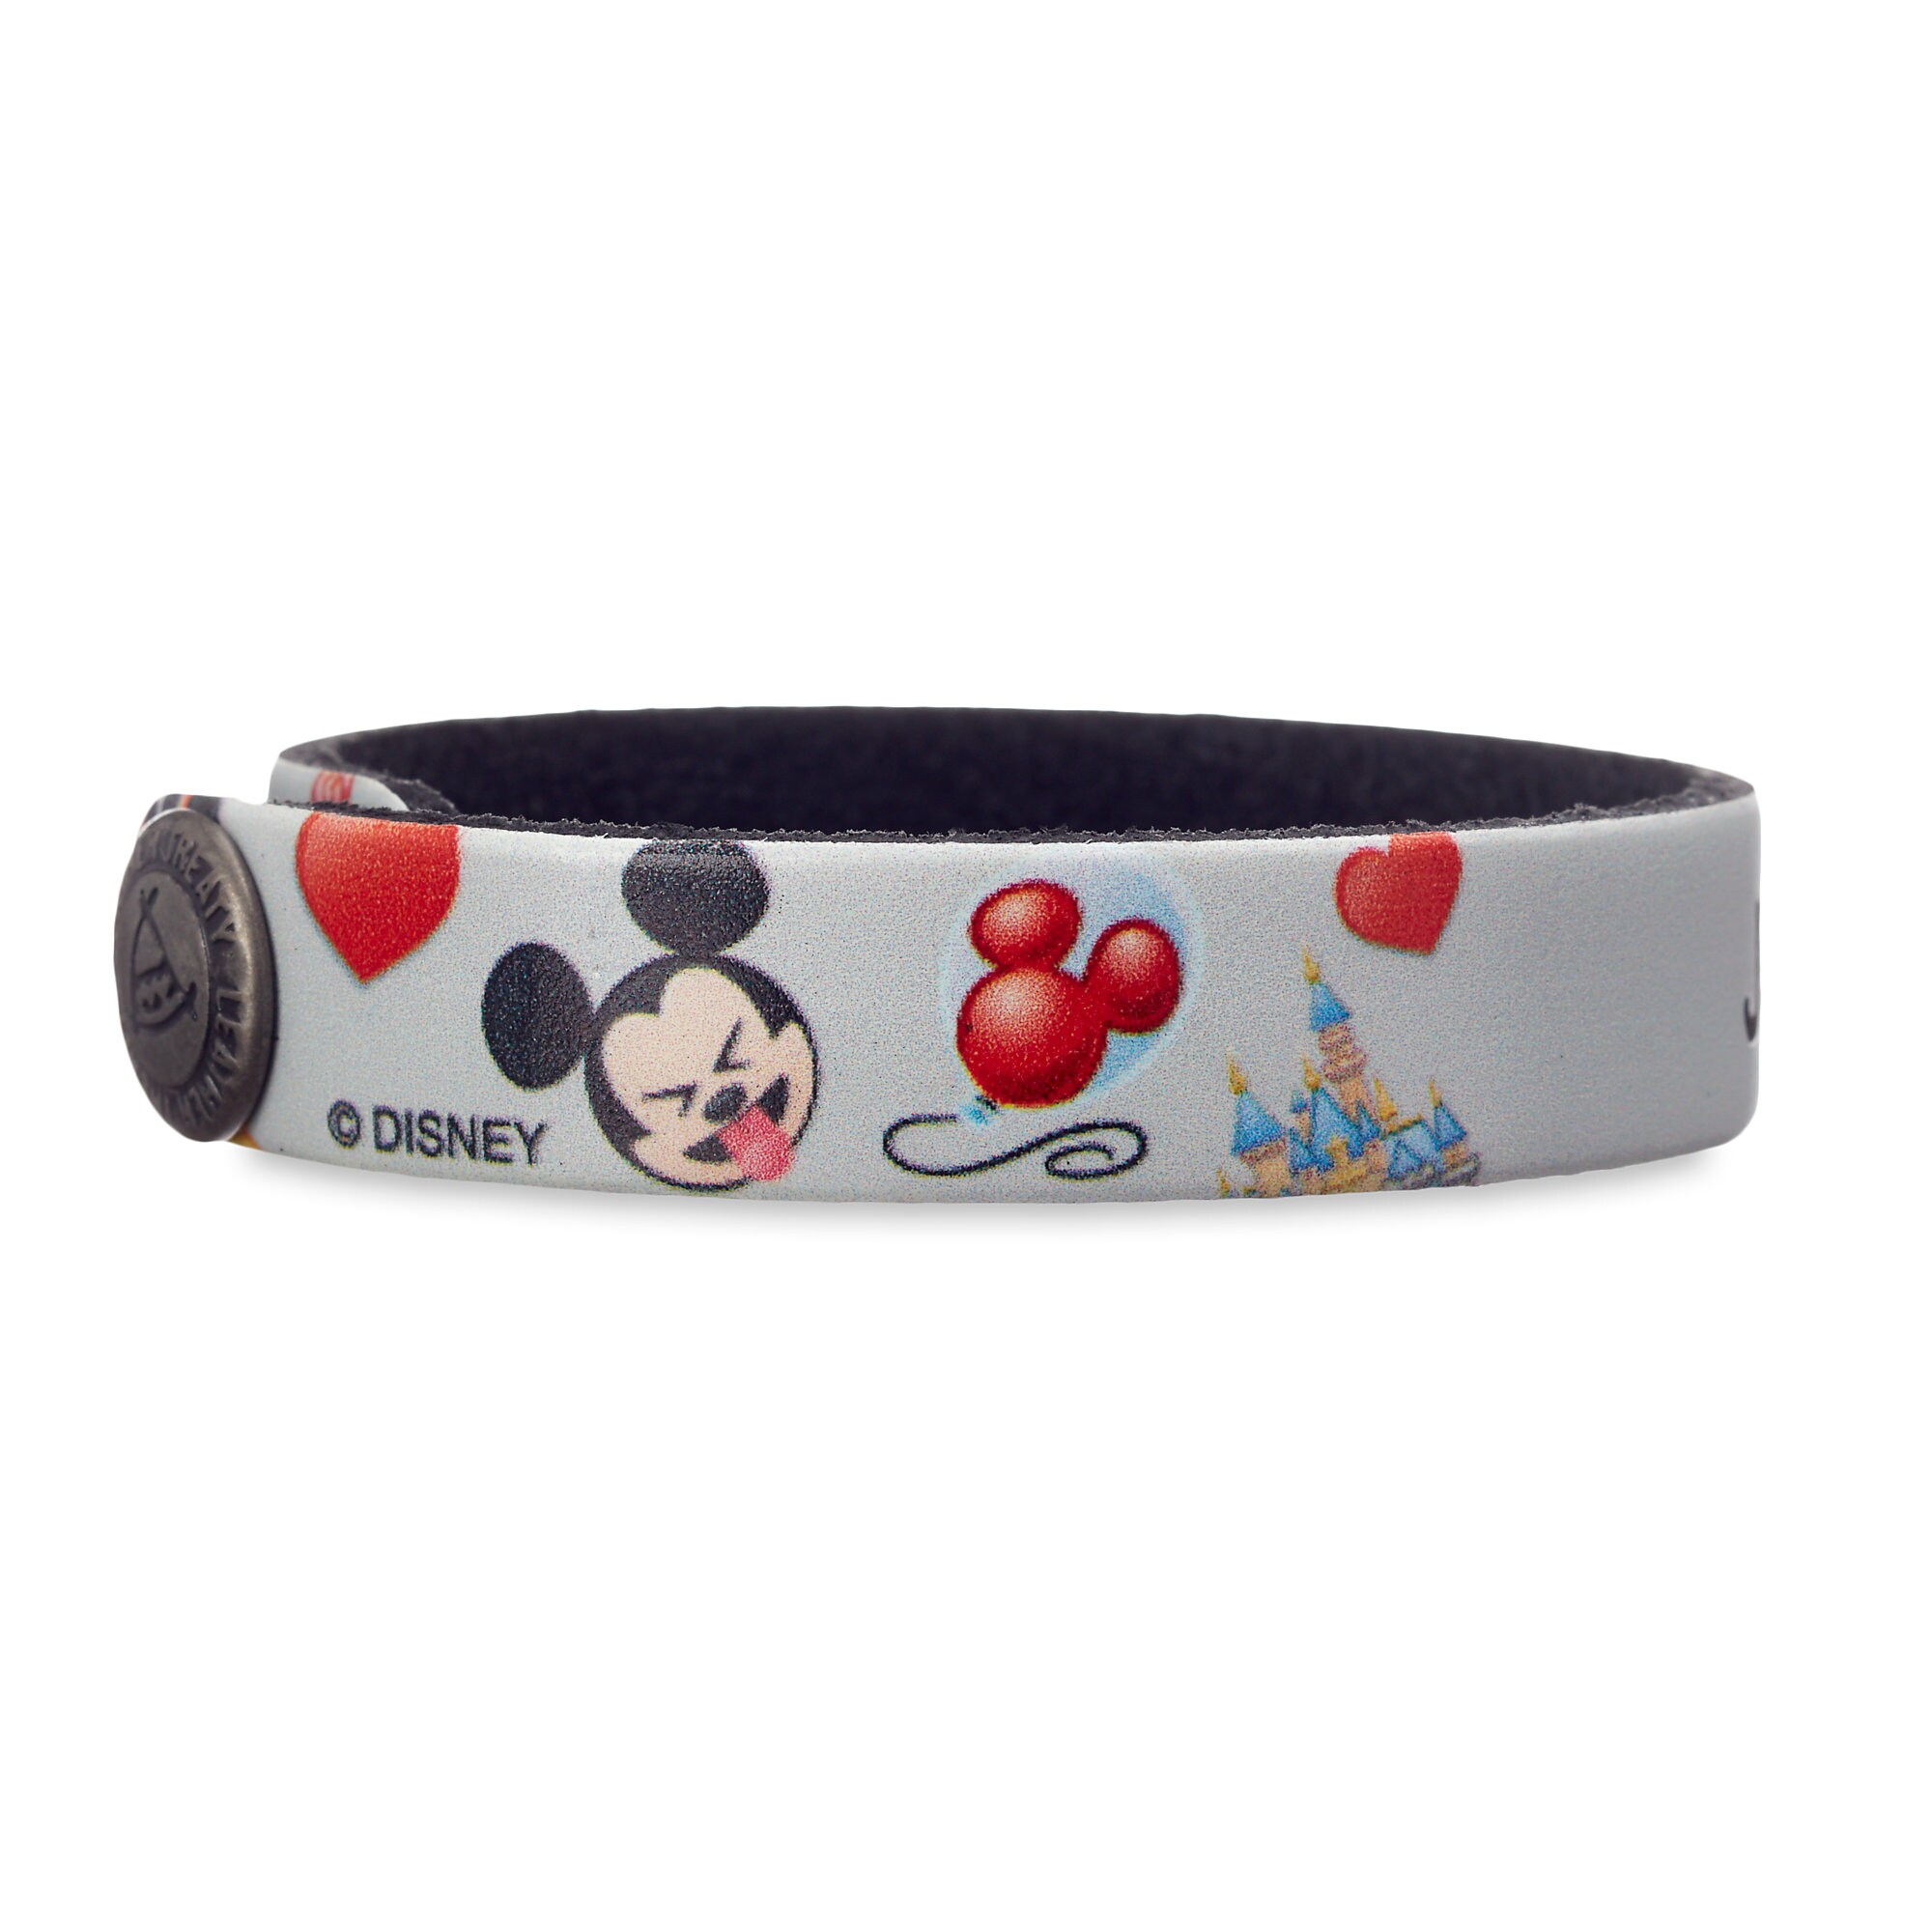 Disney Parks Emoji Leather Bracelet - Personalizable